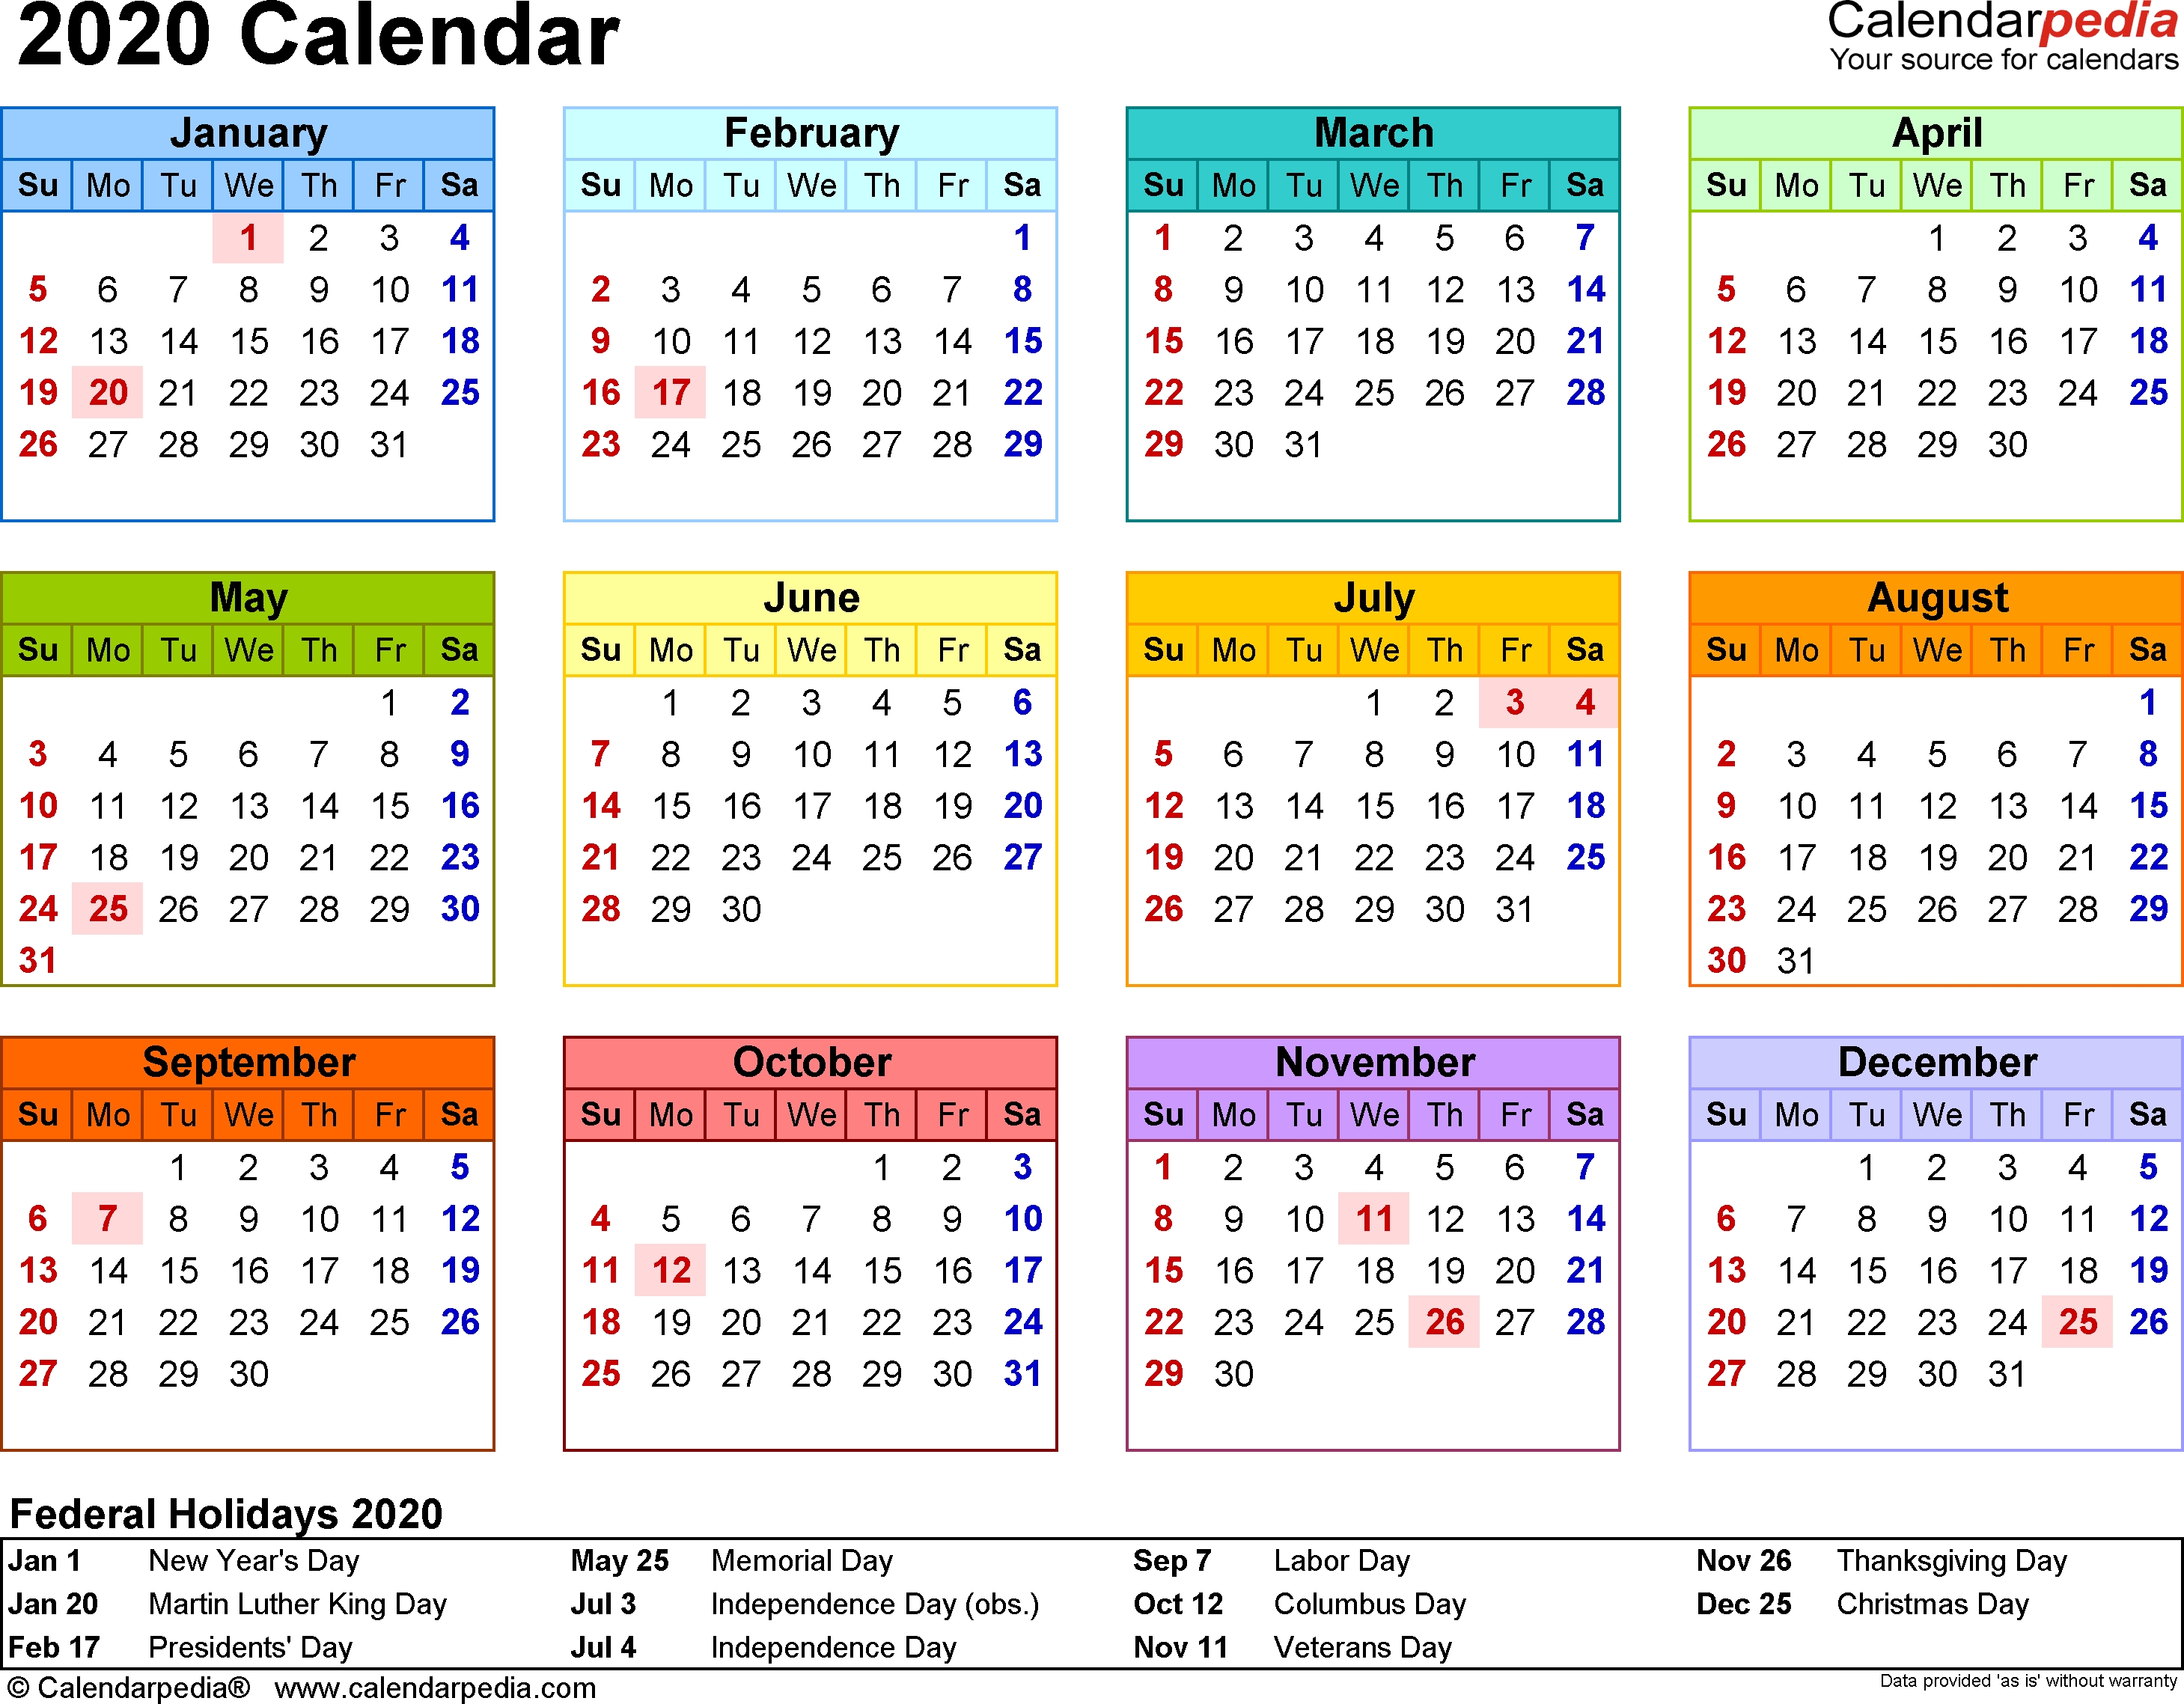 2020 Calendar - Free Printable Microsoft Word Templates pertaining to Downloadable Calendar 2020 For Word